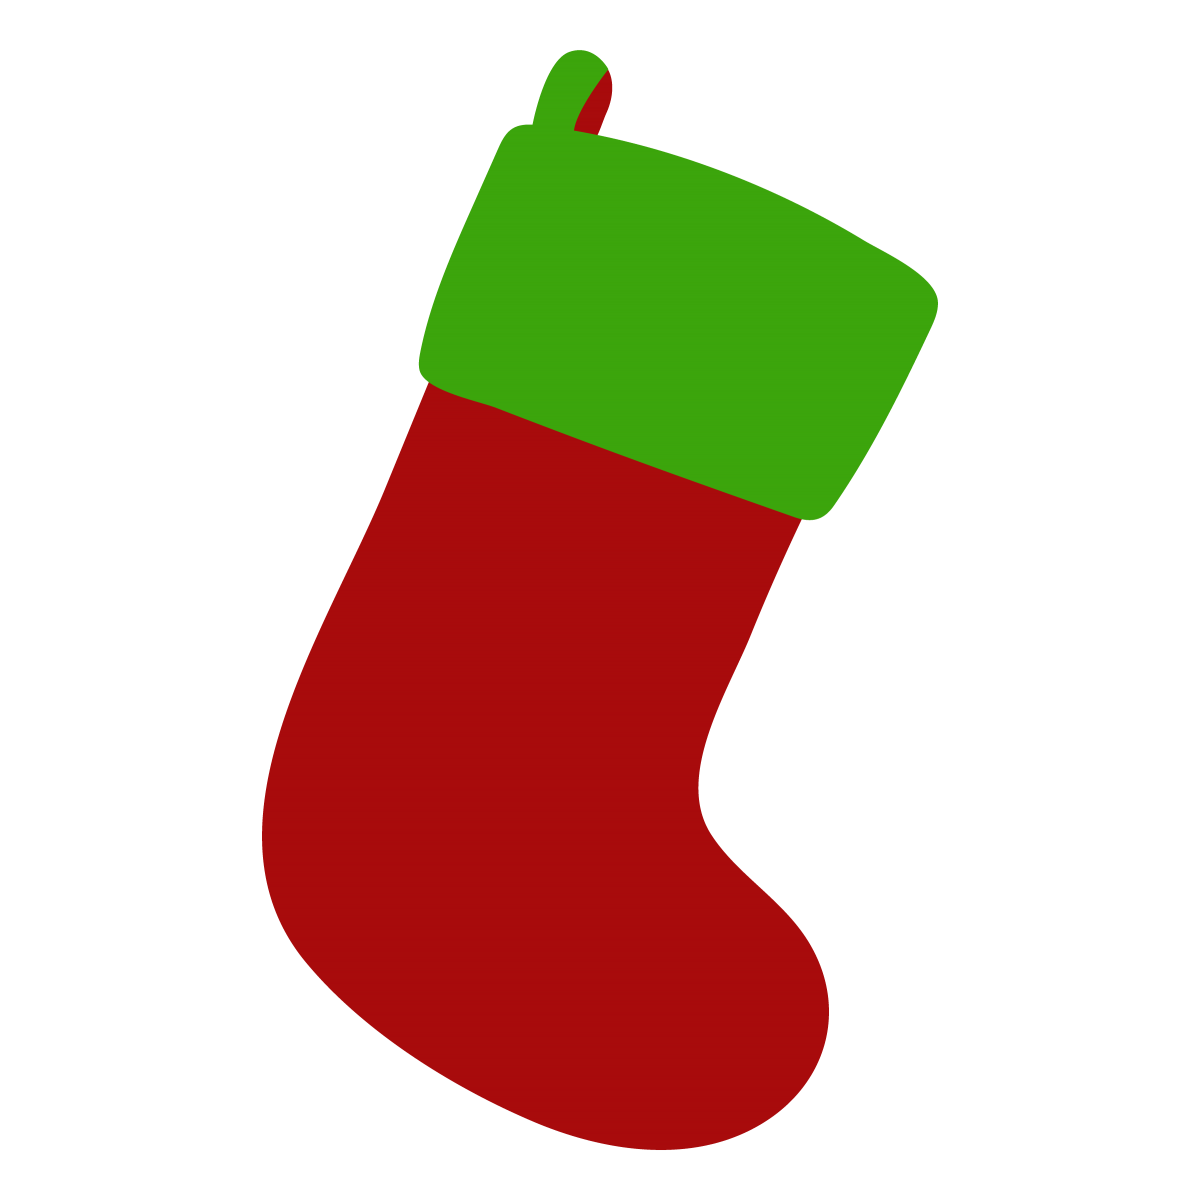 Christmas Stocking SVG